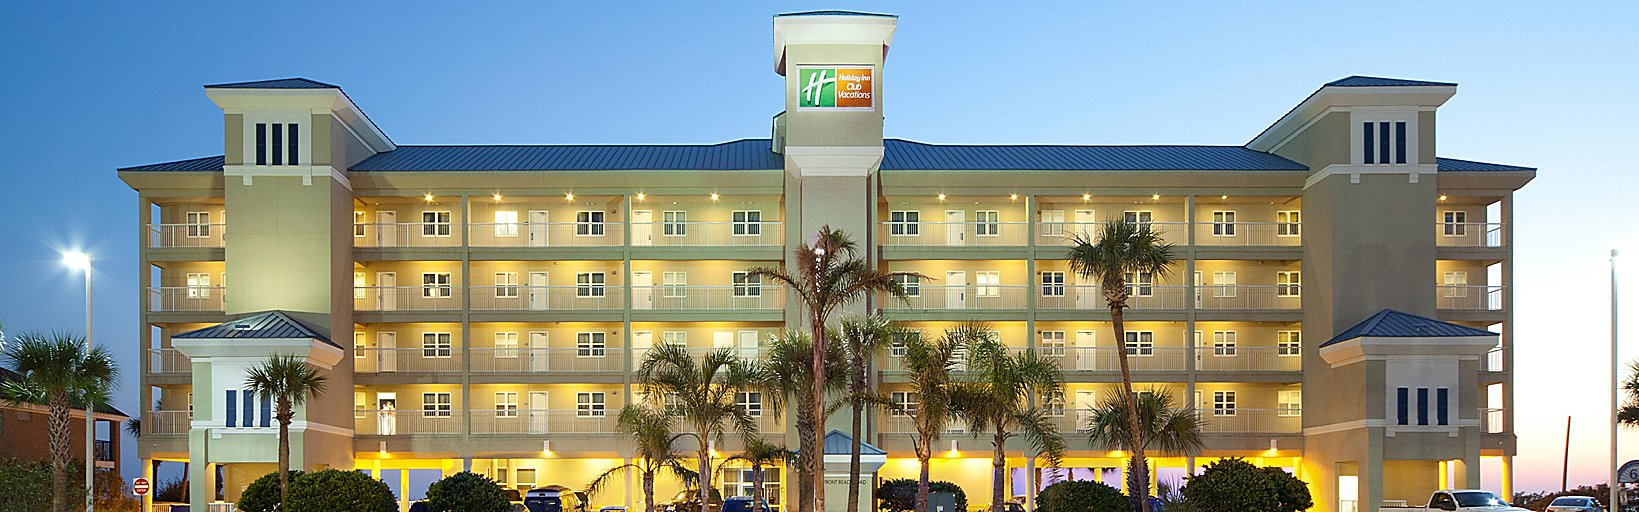 Resorts In Panama City Beach Florida Holiday Inn Club Vacations